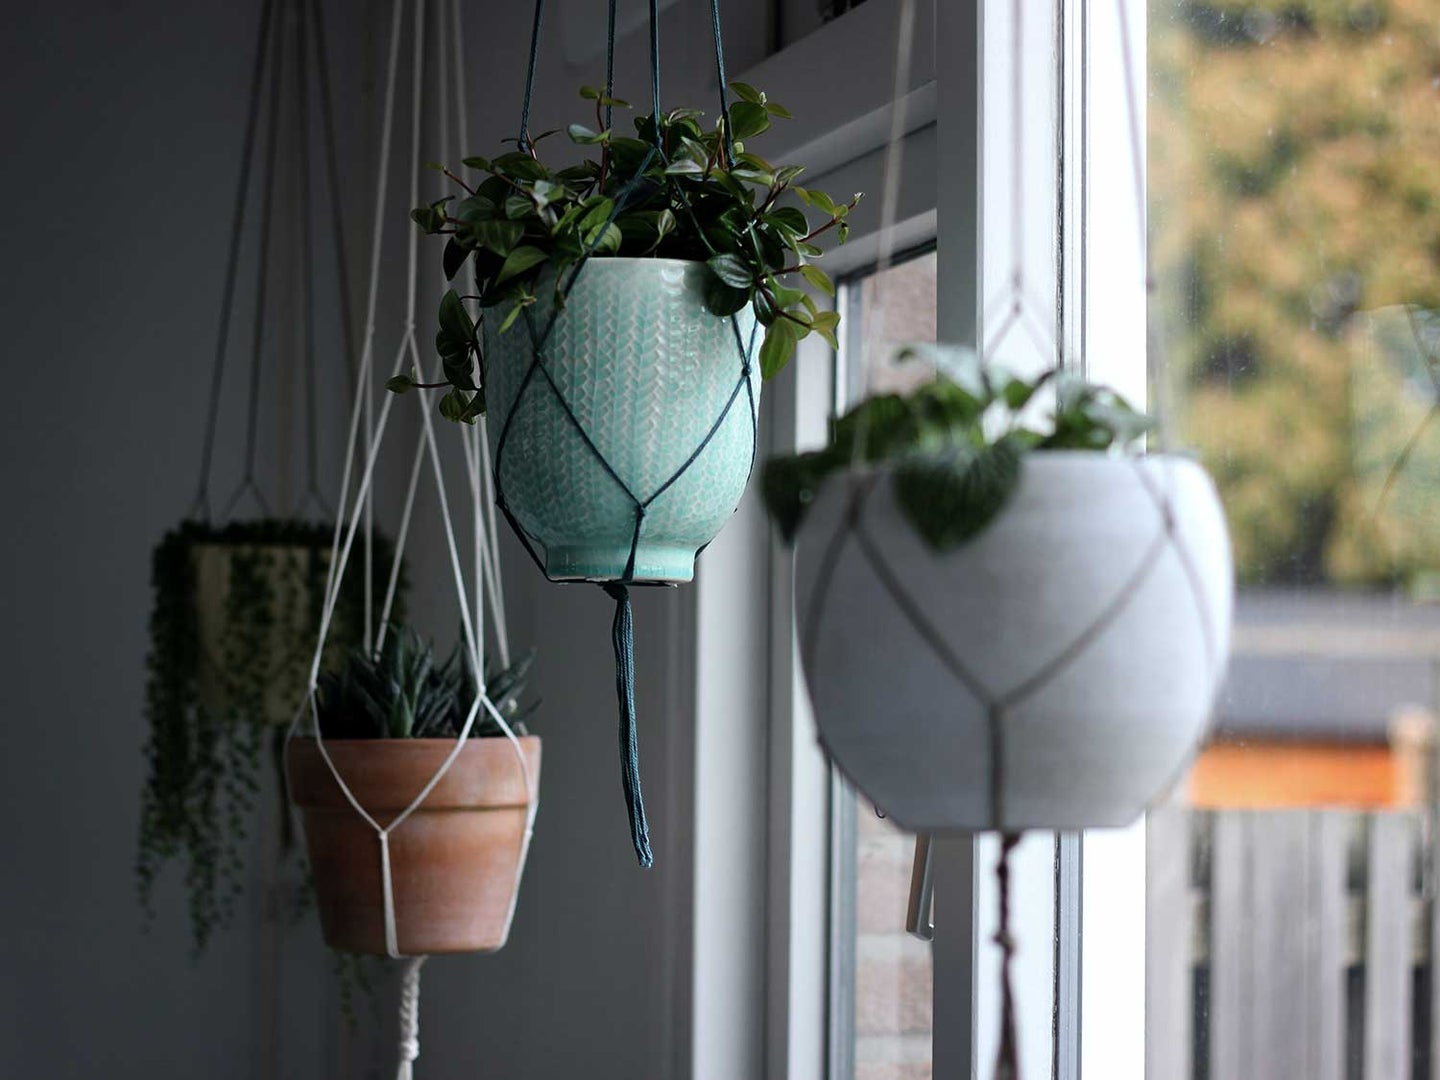 Hanging baskets holding plants.